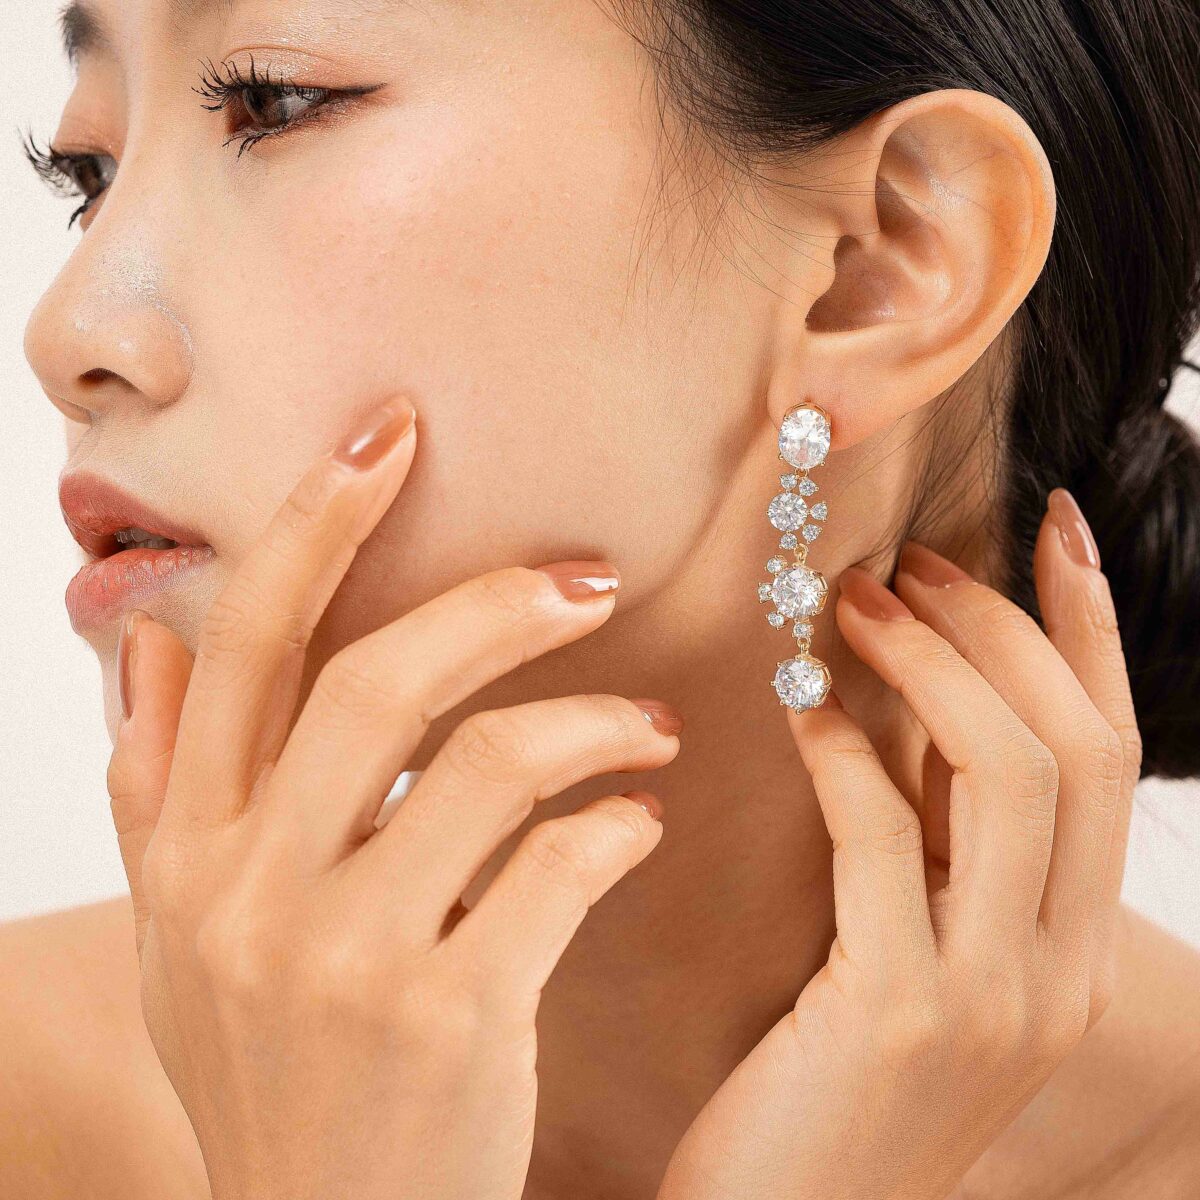 https://m.clubbella.co/product/harris-14k-gold-plated-crystal-earrings/ HARRIS CRYSTAL EARRINGS (1)